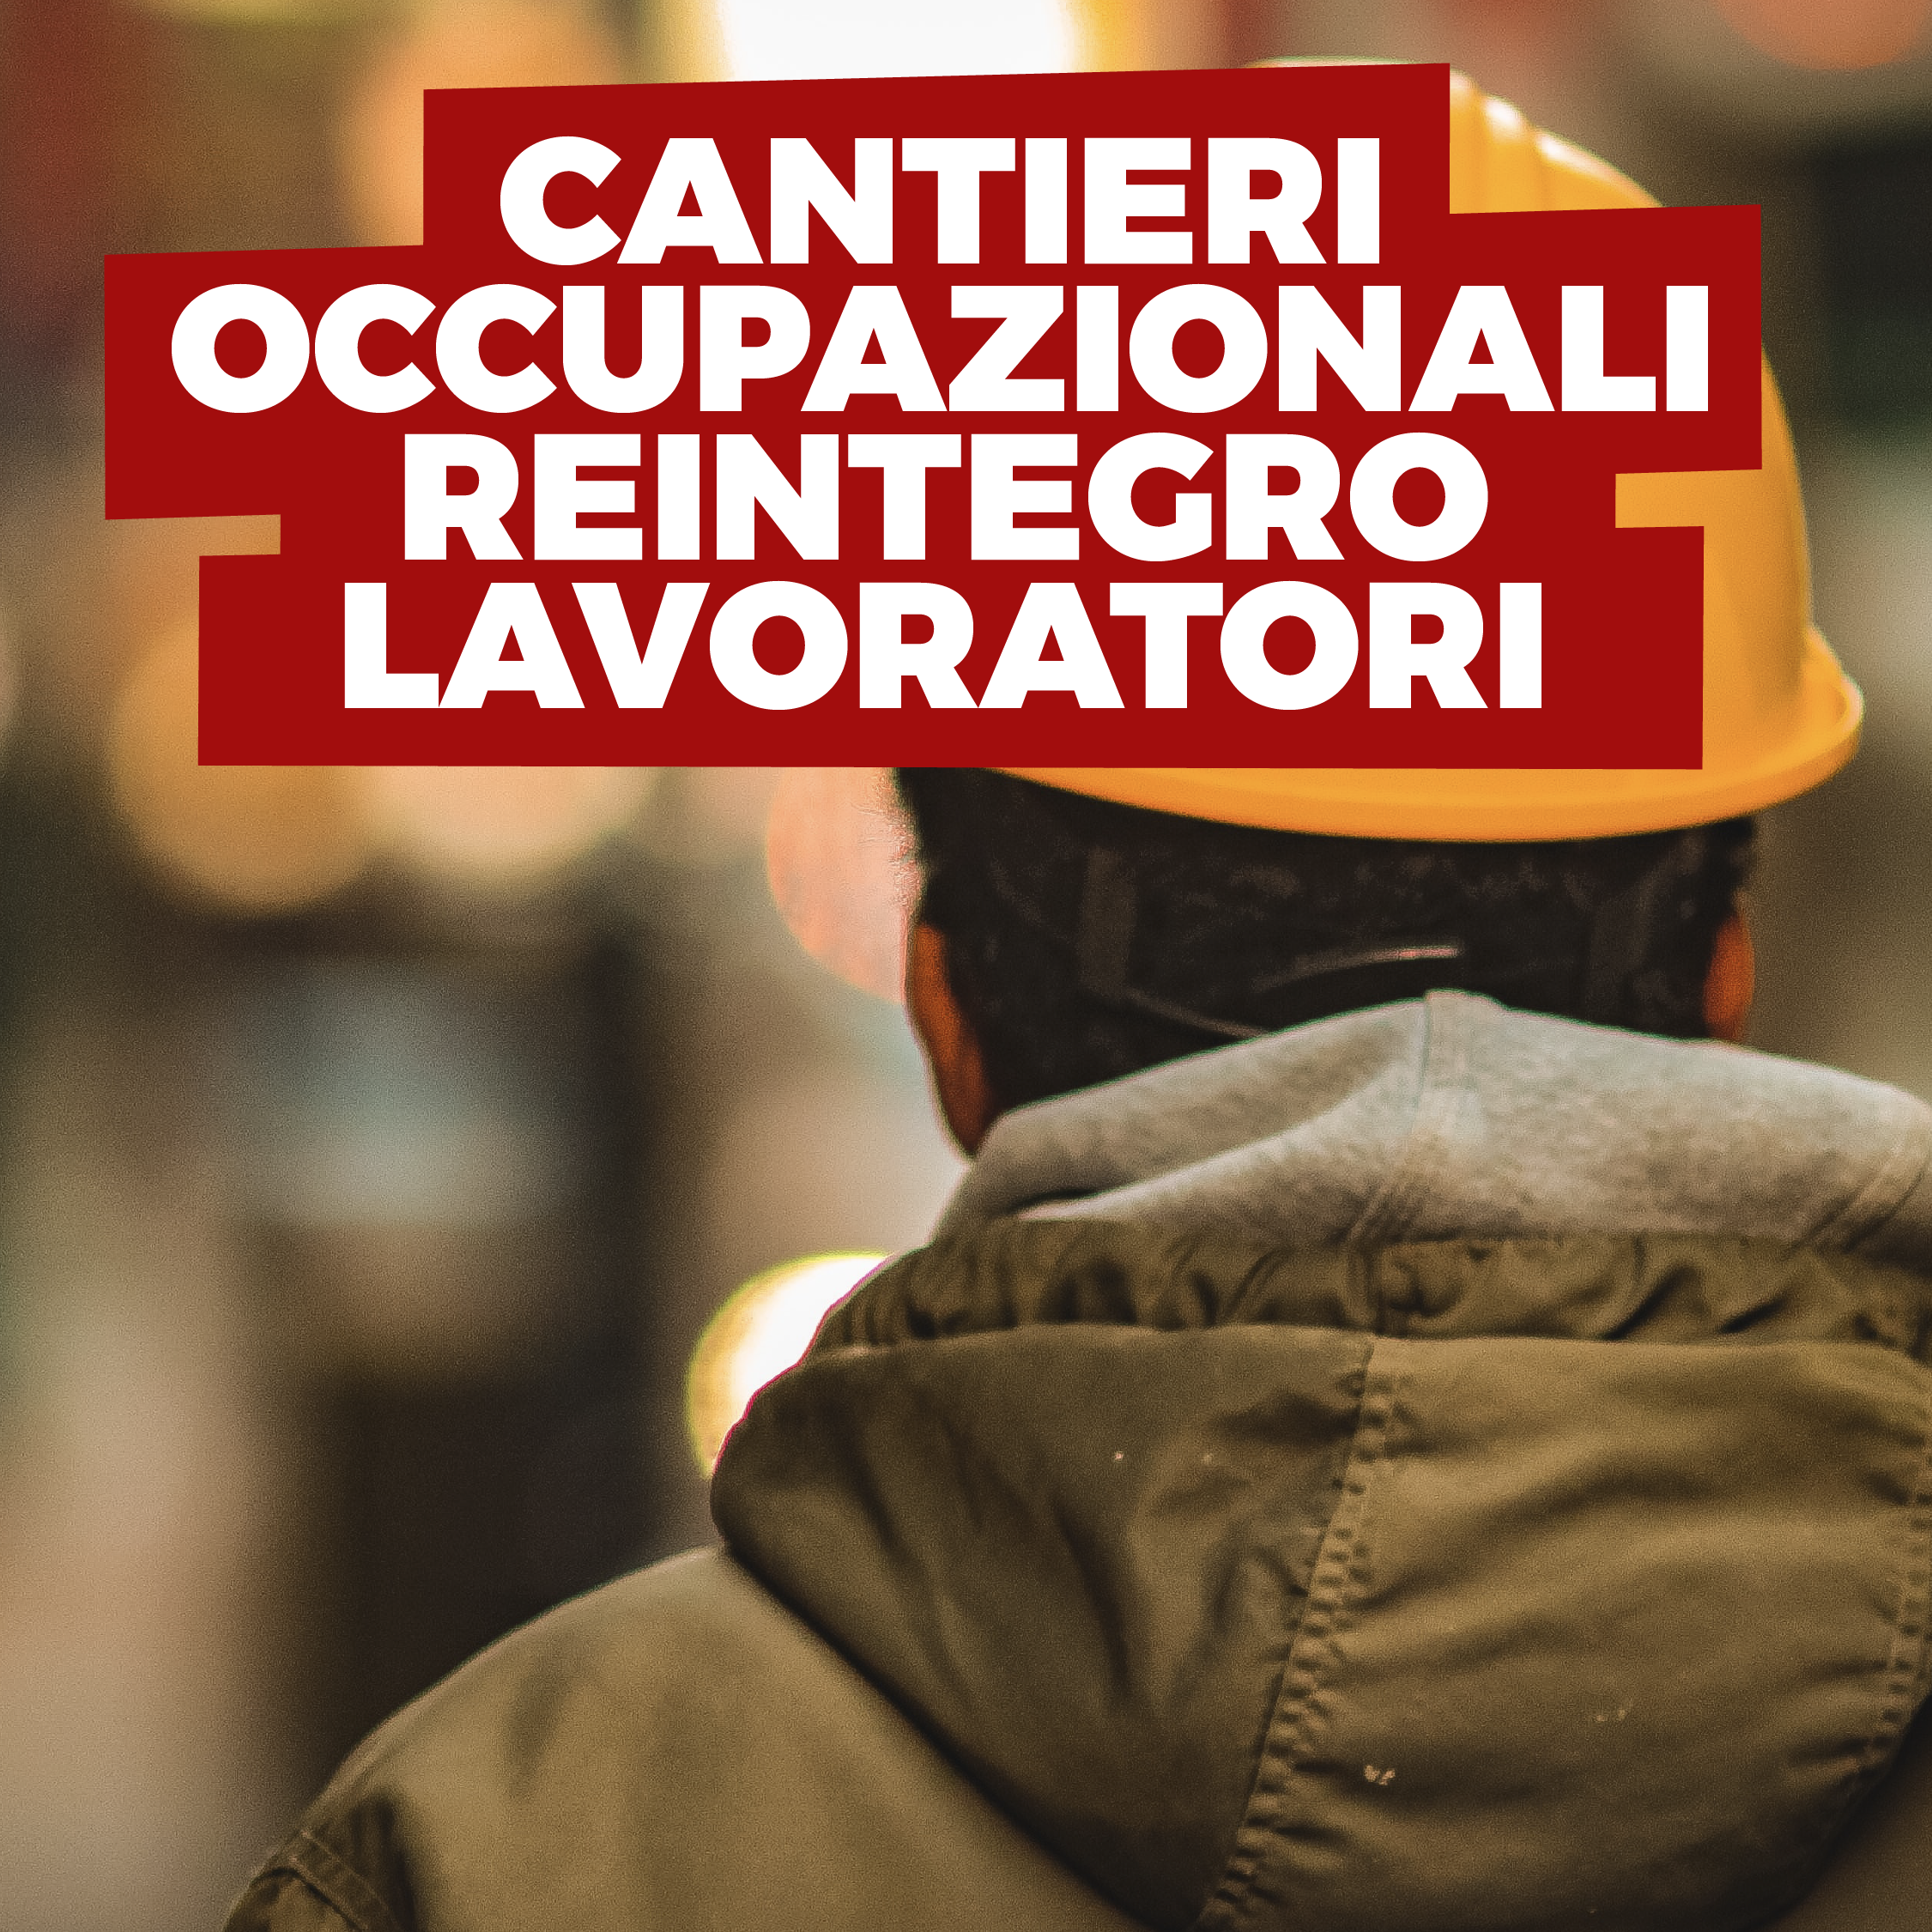 Reintegro lavoratori in cantieri occupazionali